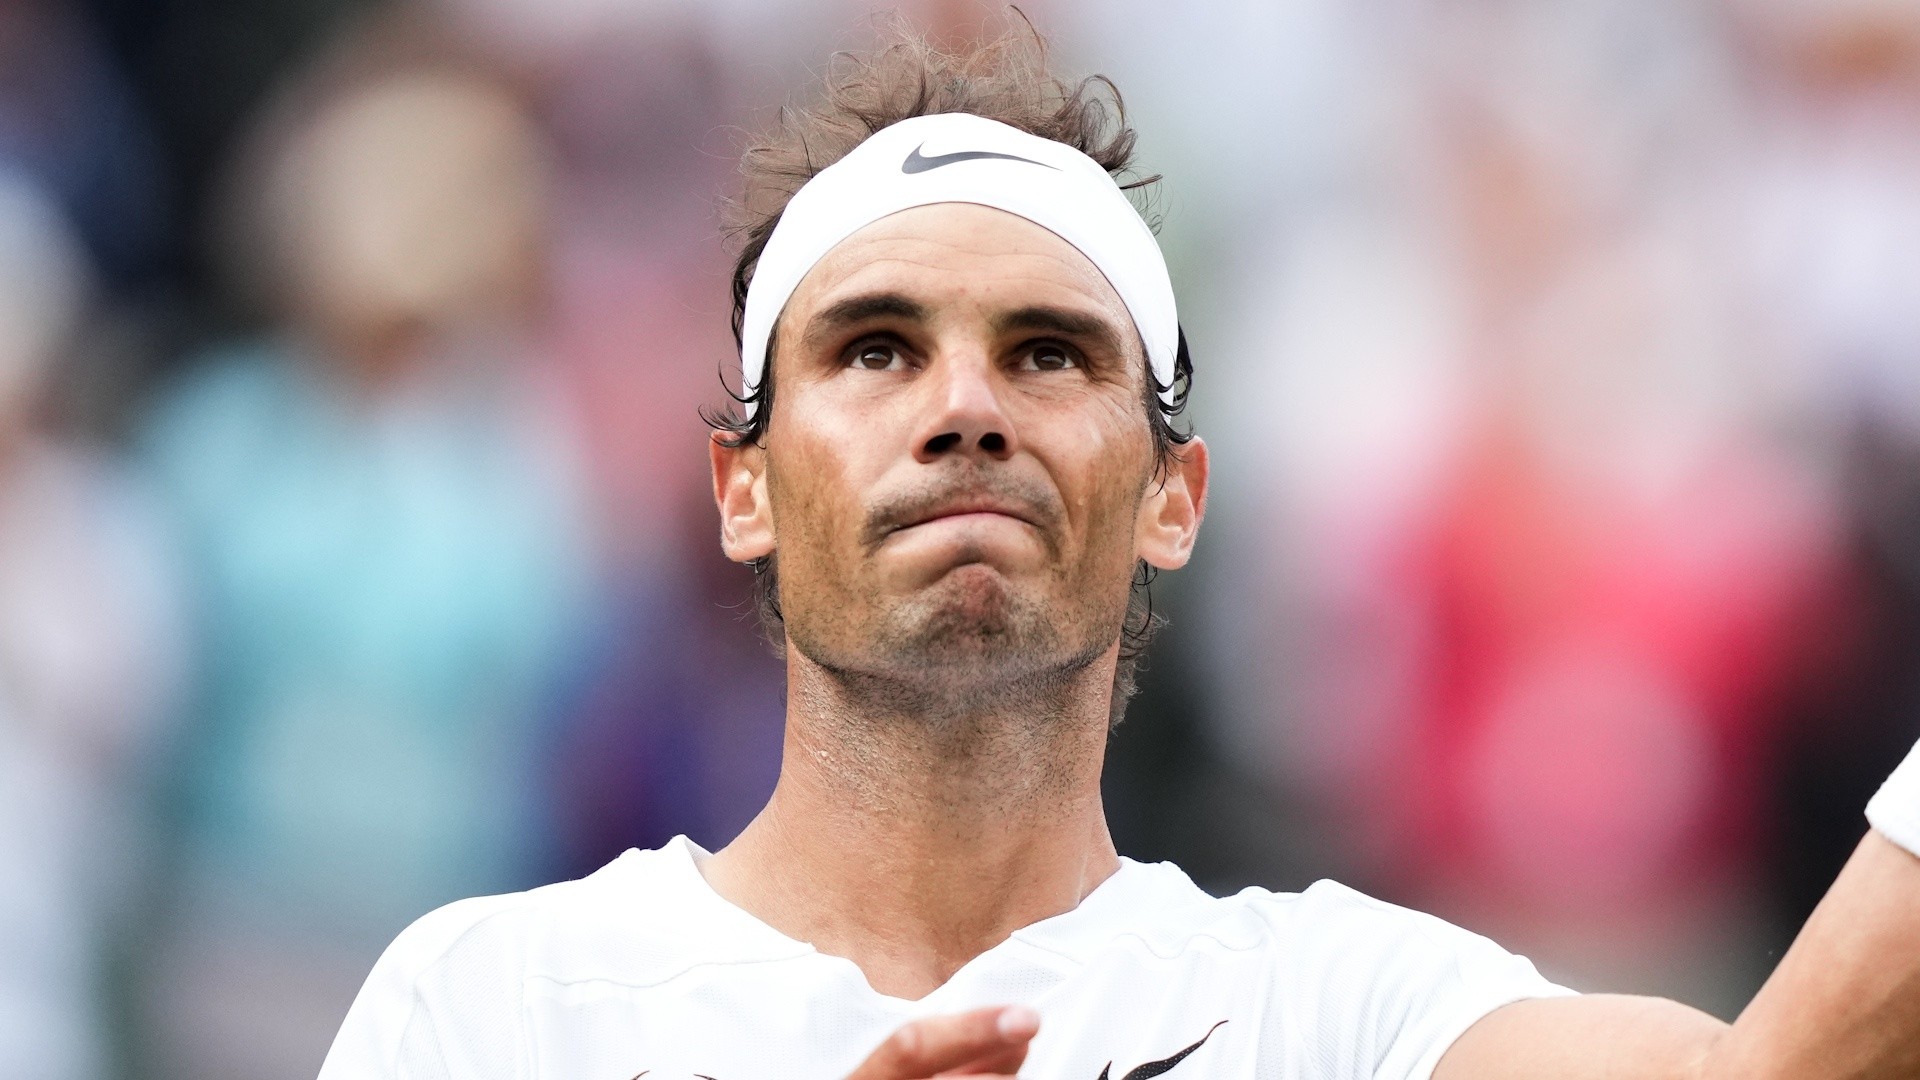 What time is Rafael Nadal playing tonight?